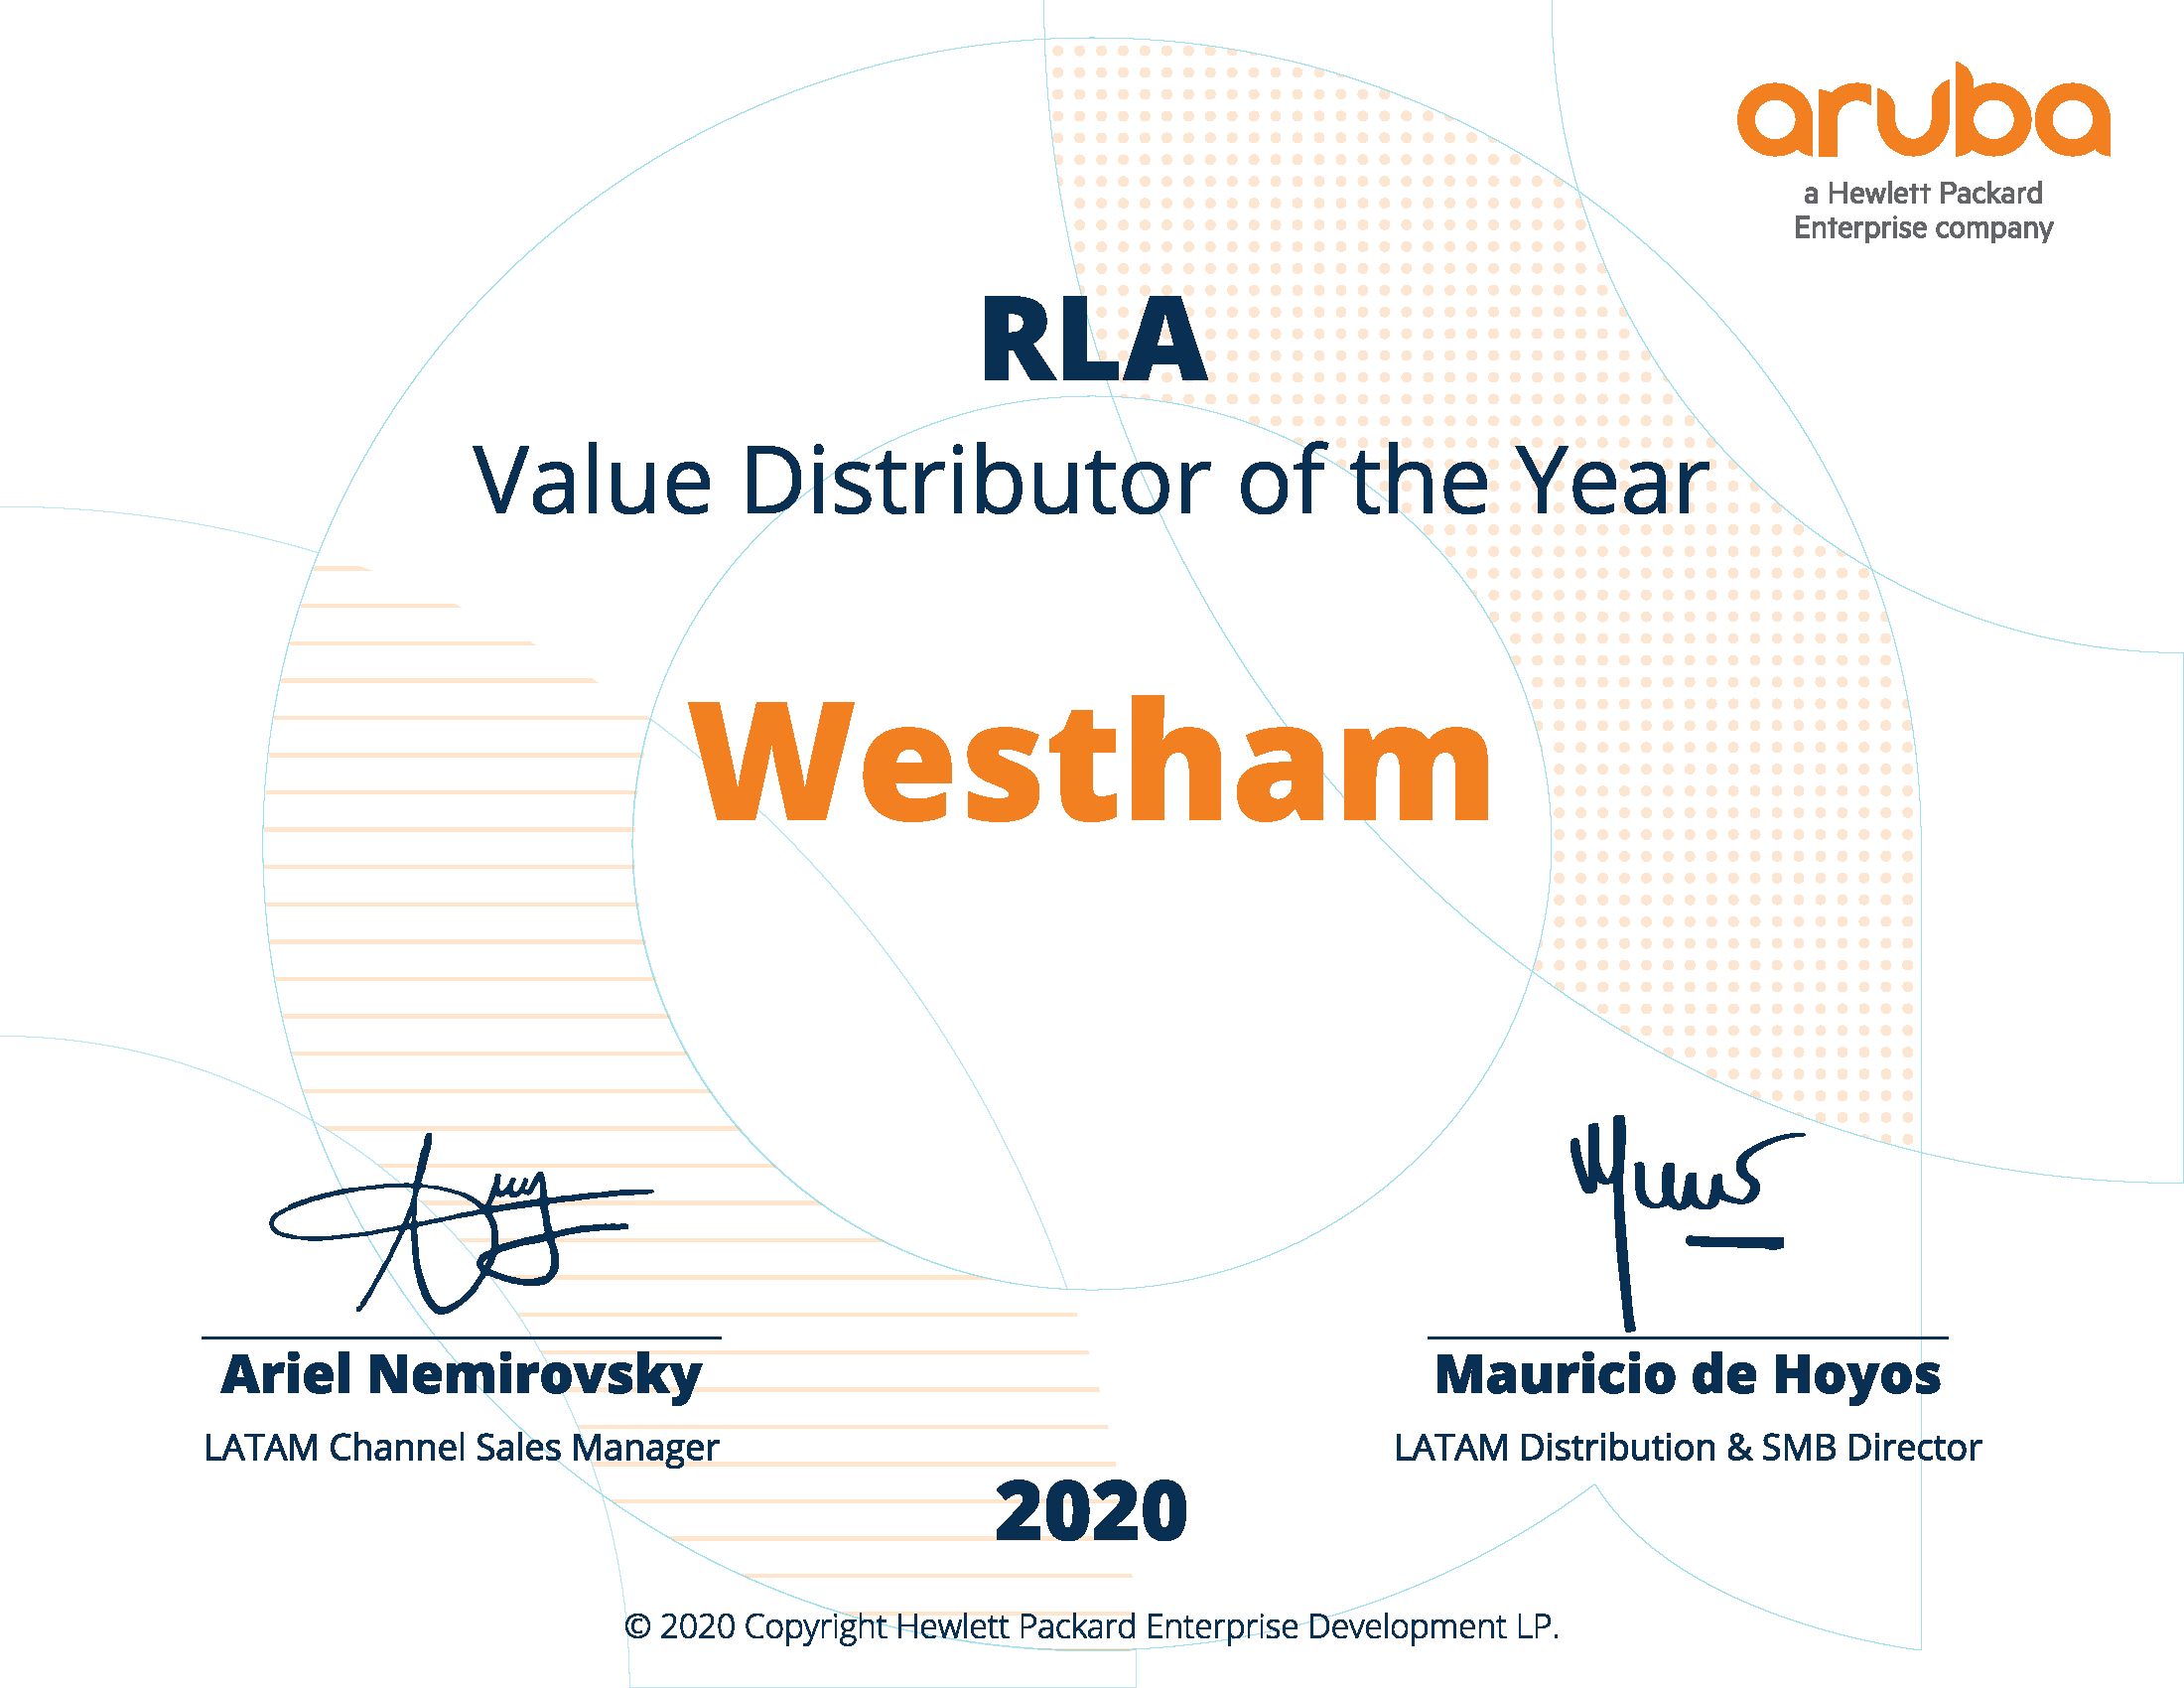 westham top value distributor for Aruba